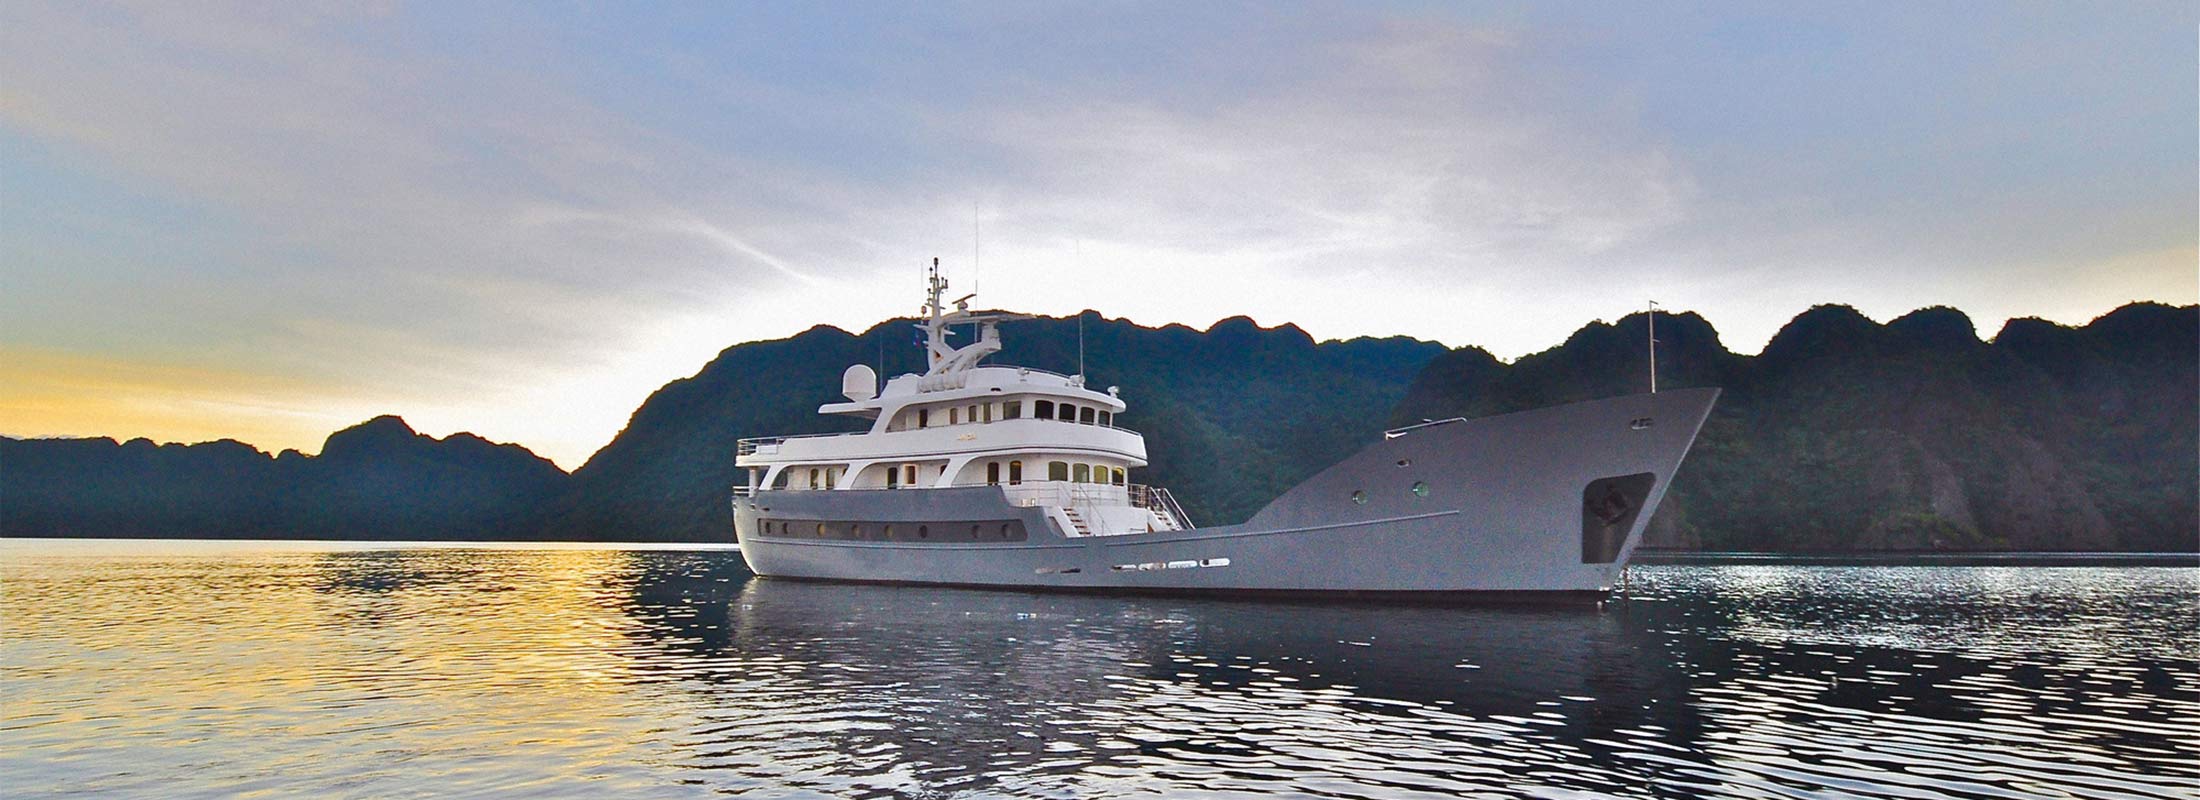 Anda Motor Yacht for Charter Tahiti Fiji Great Barrier Reef slider 2